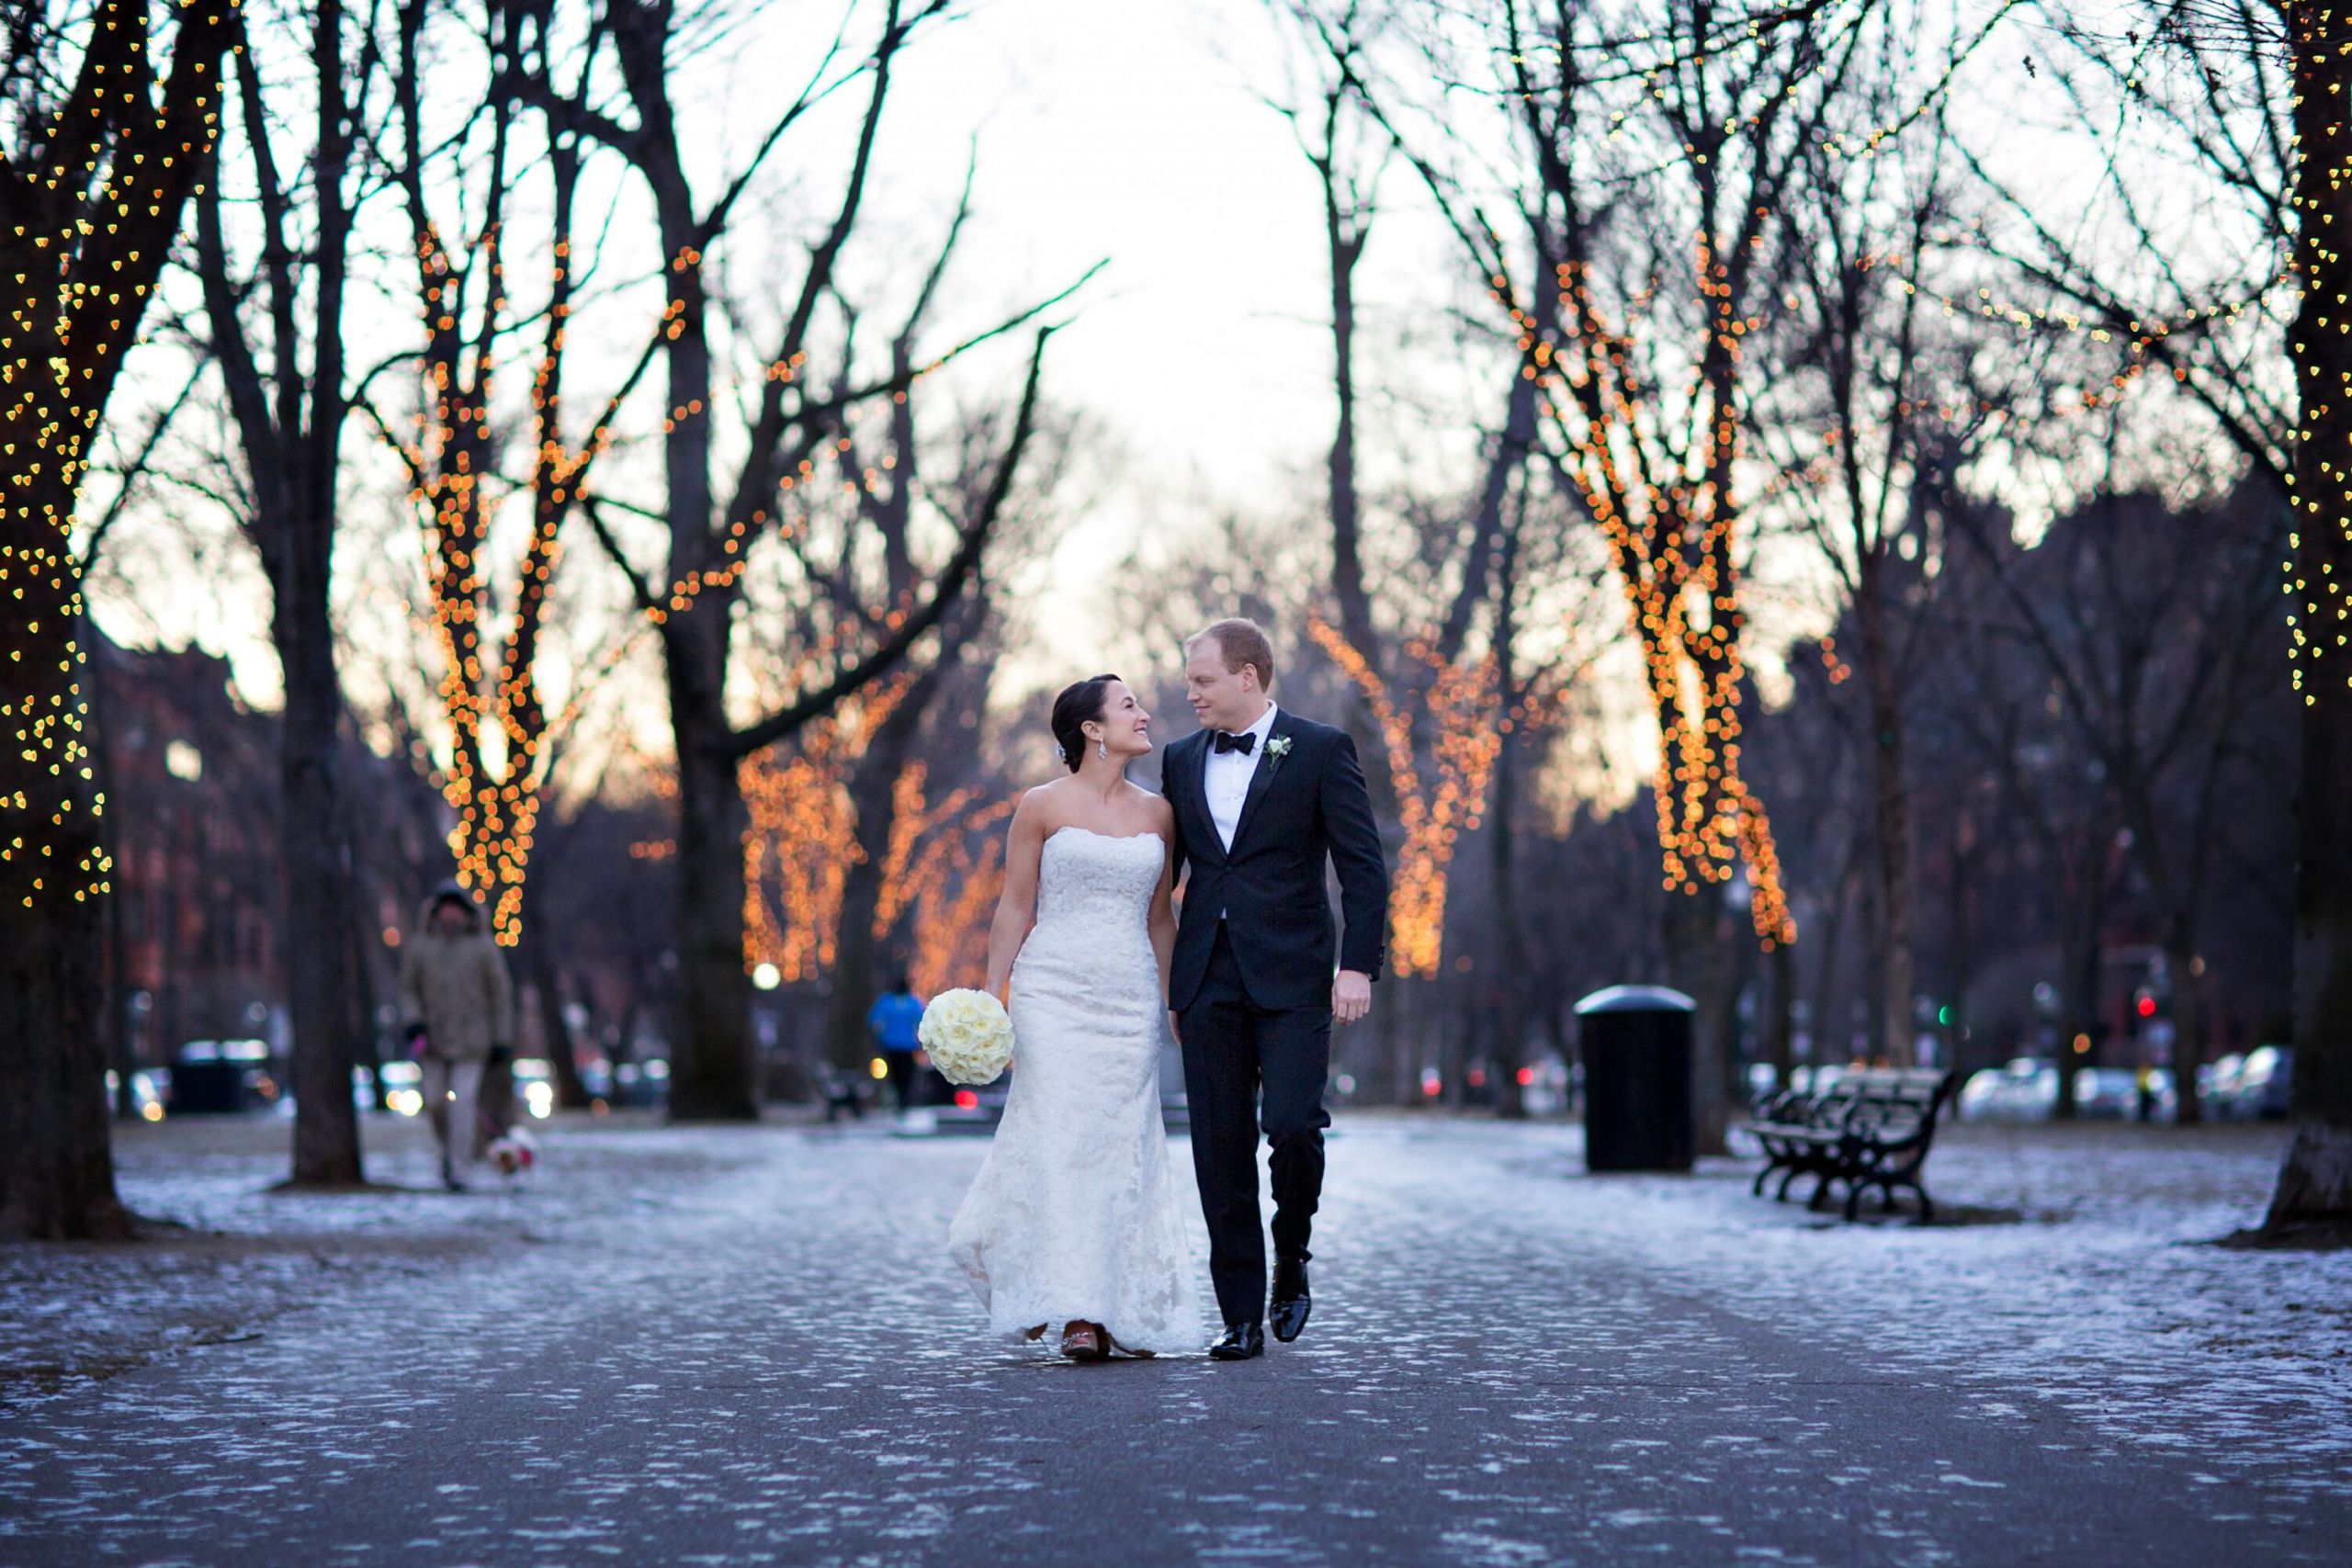 Boston Date Ideas Winter
 An Elegant Winter Wedding at the Mandarin Oriental in